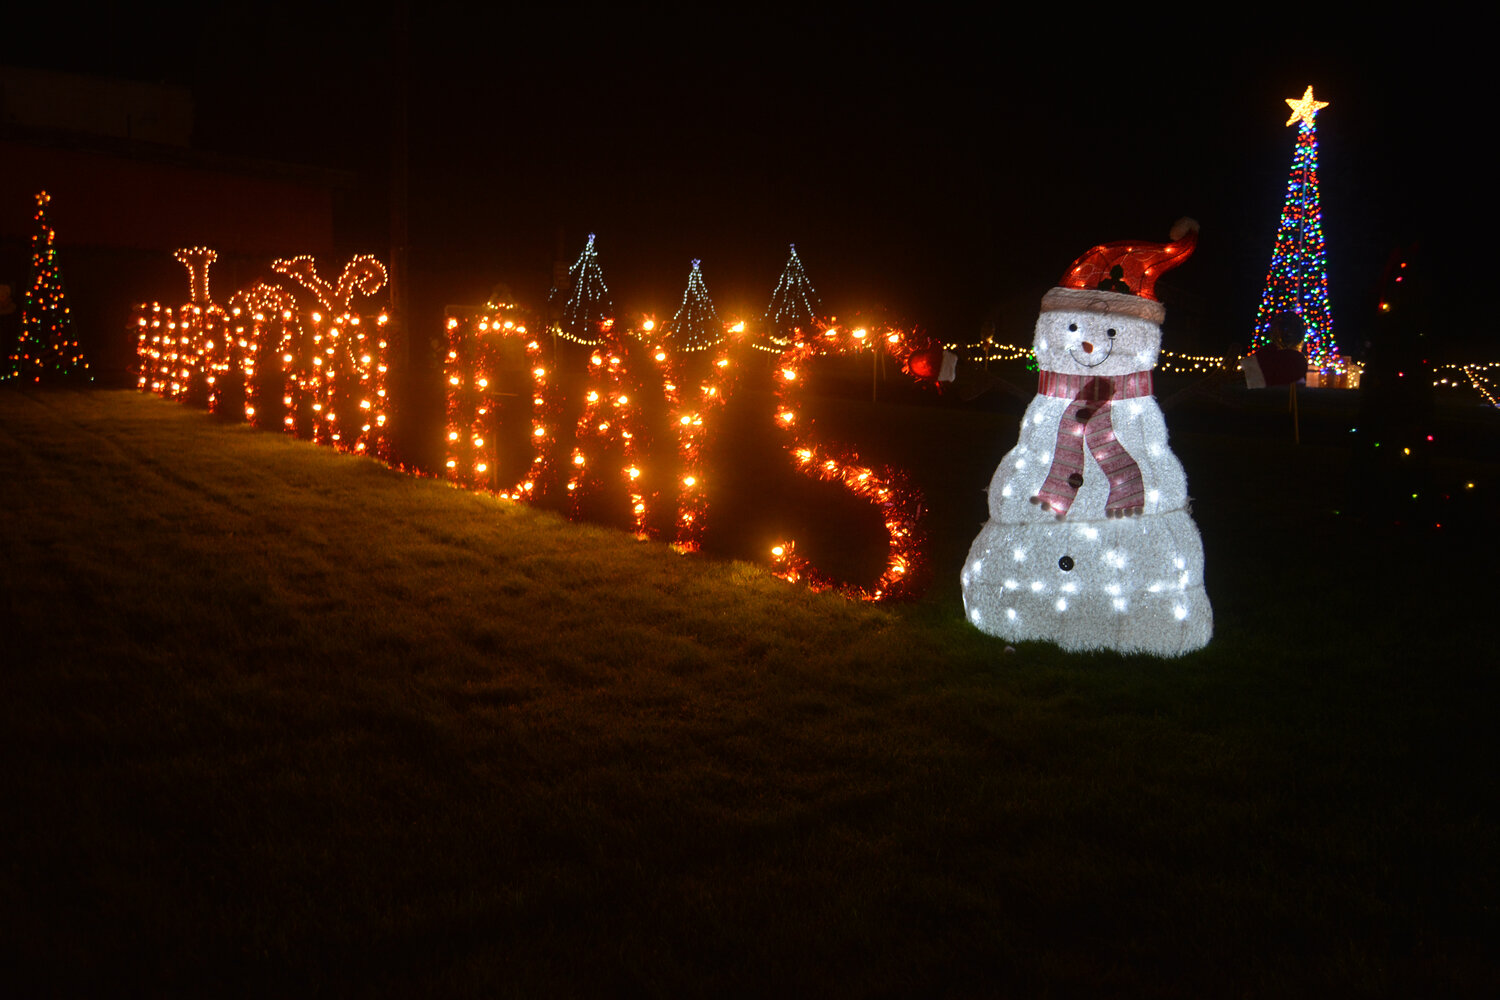 An illuminated snowman brightens Rainier's Holiday Park on Dec. 2.